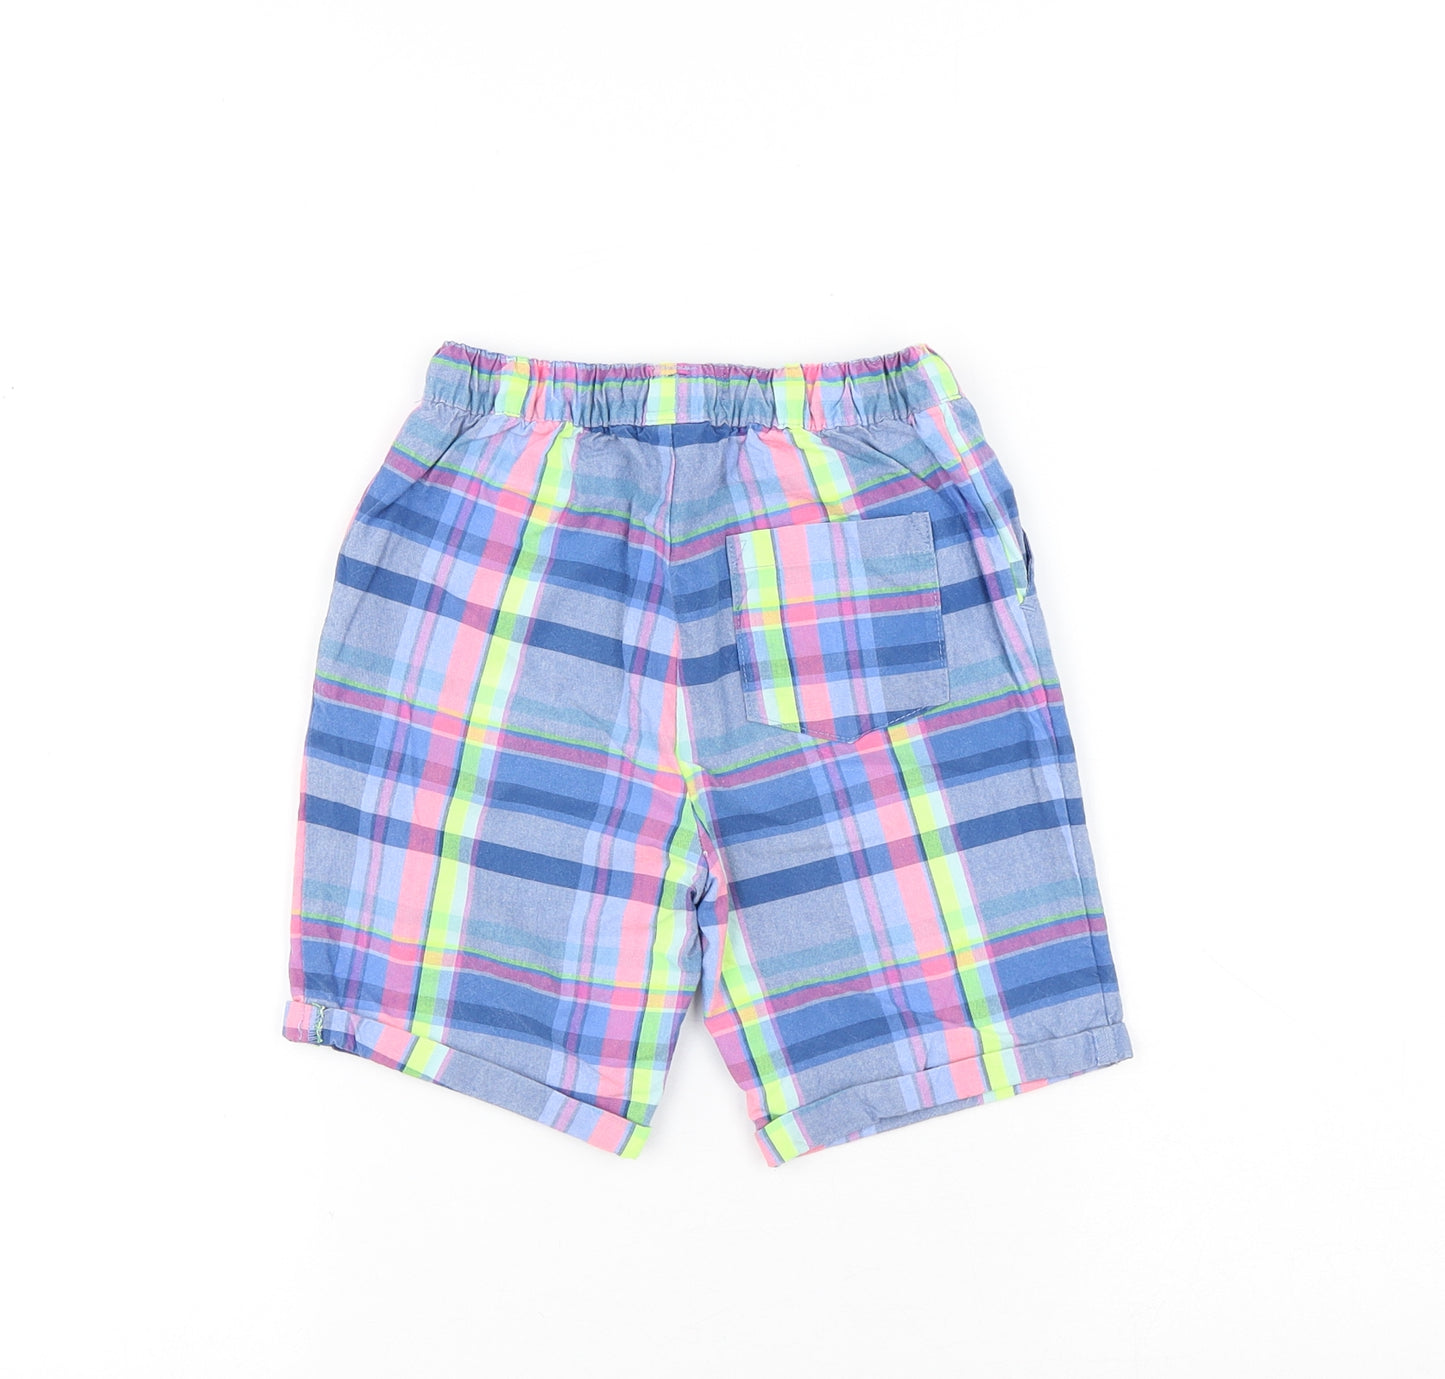 NEXT Boys Multicoloured Plaid Cotton Chino Shorts Size 5-6 Years Regular Drawstring